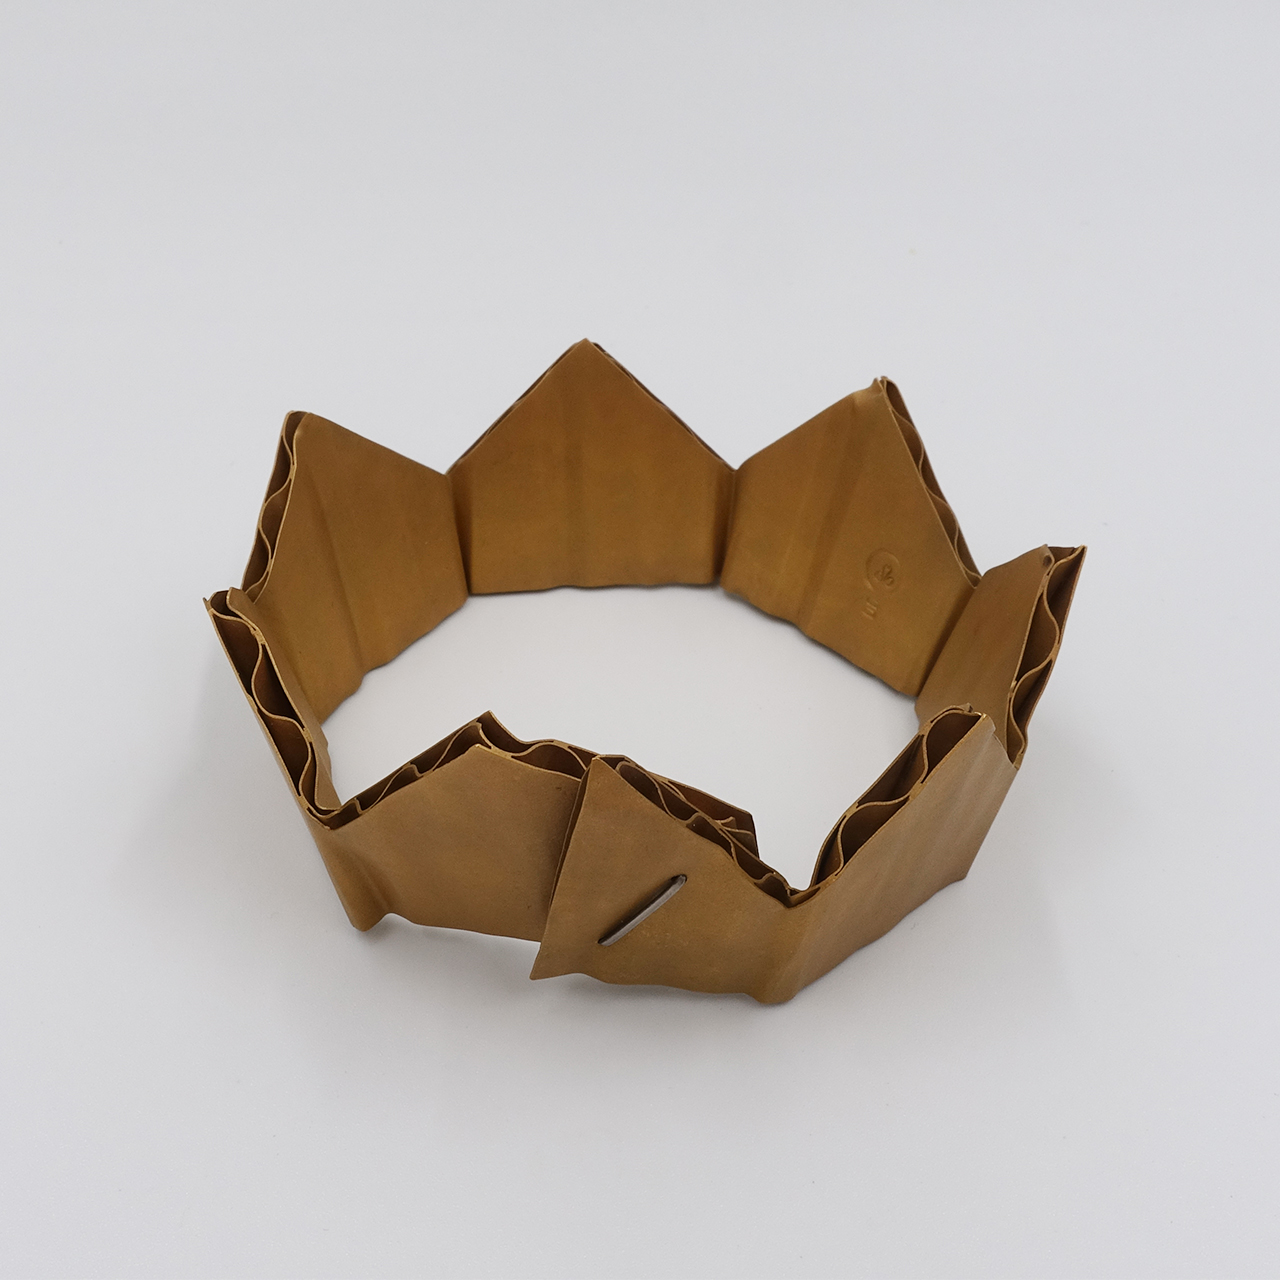 Cardboard Crown (gold) by David Bielander